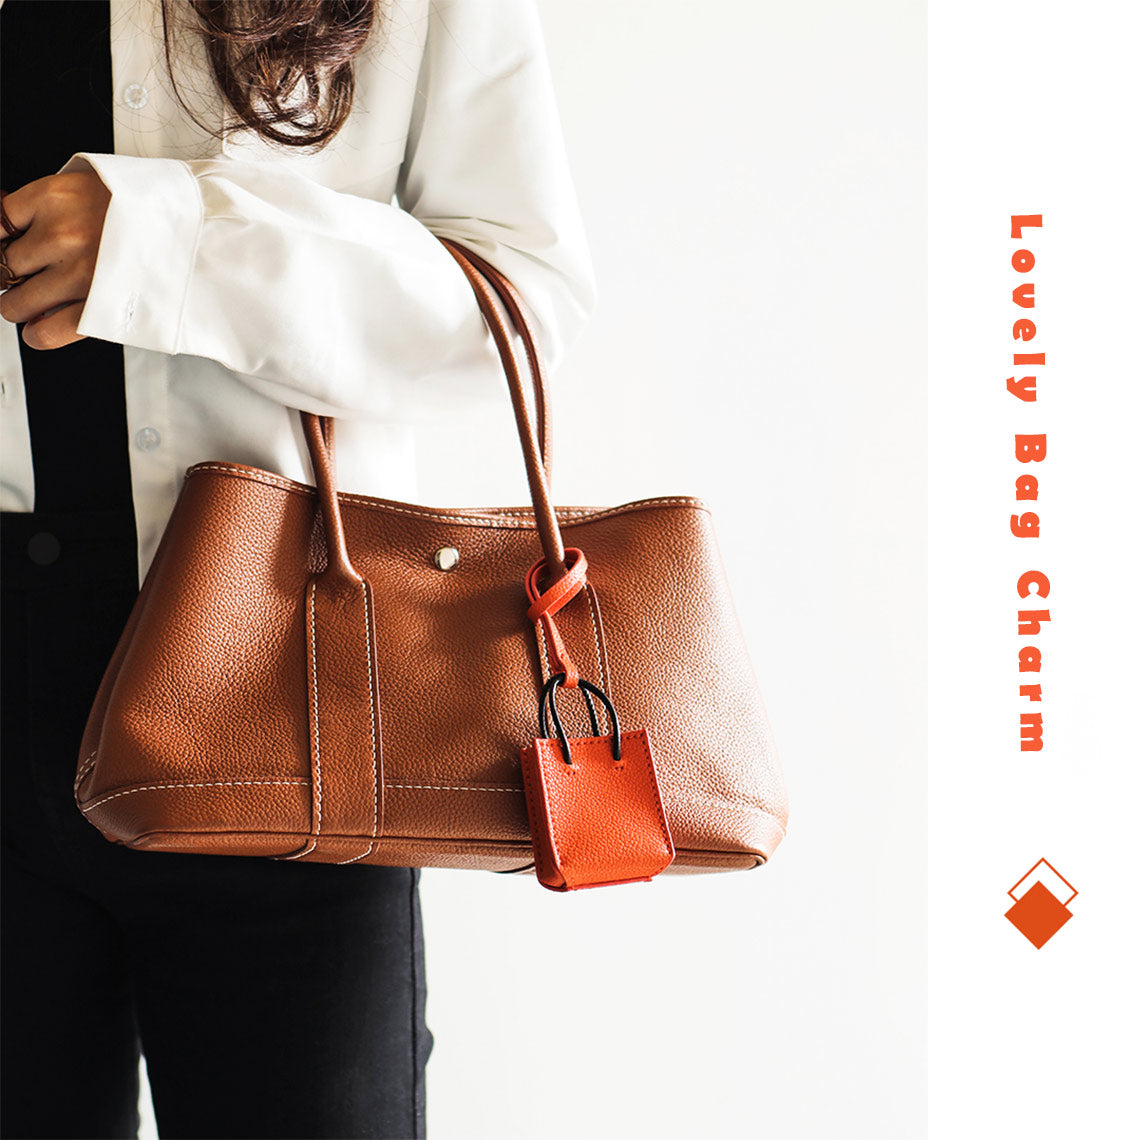 DIY orange leather bag charm | Inspired Hermes leather bag charm